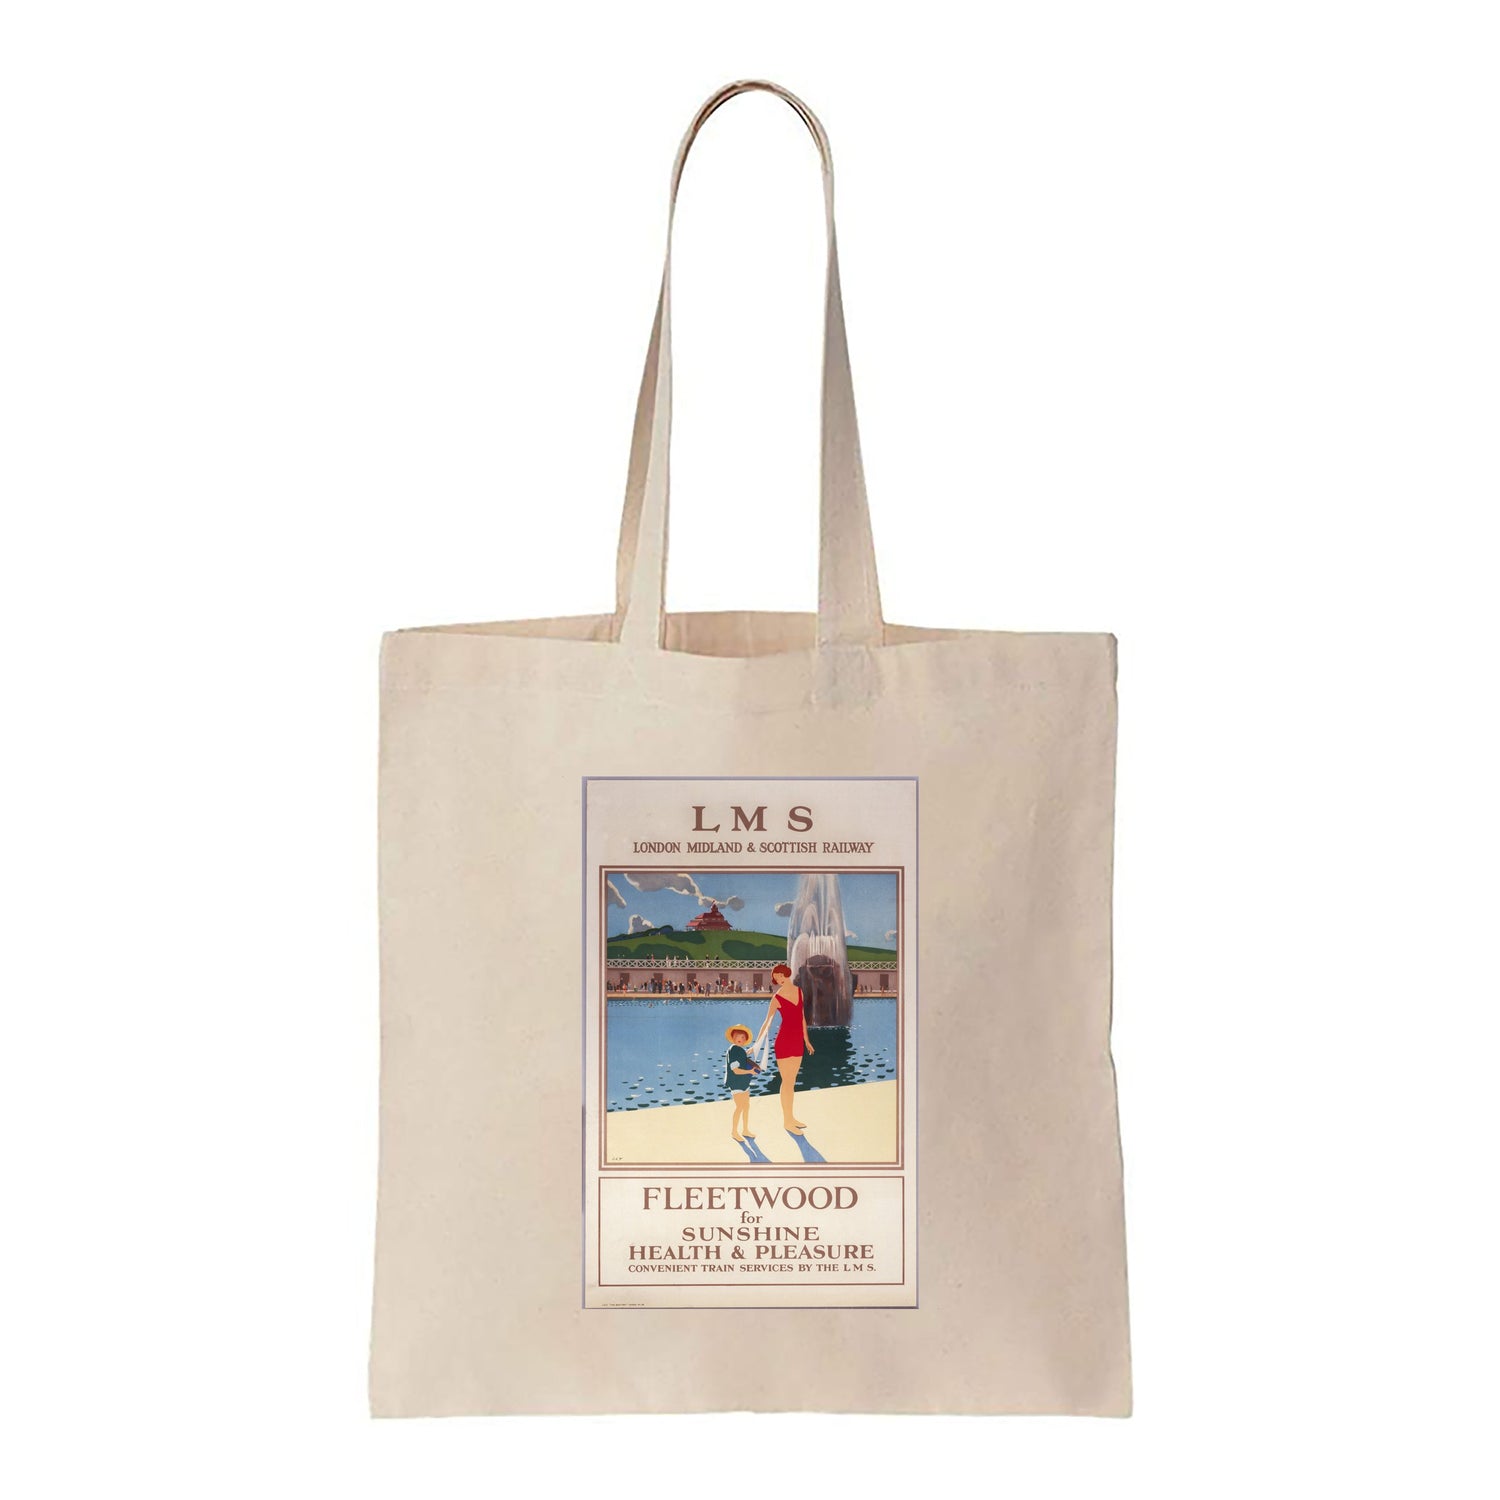 Fleetwood for Sunshine, Health and Pleasure - Canvas Tote Bag